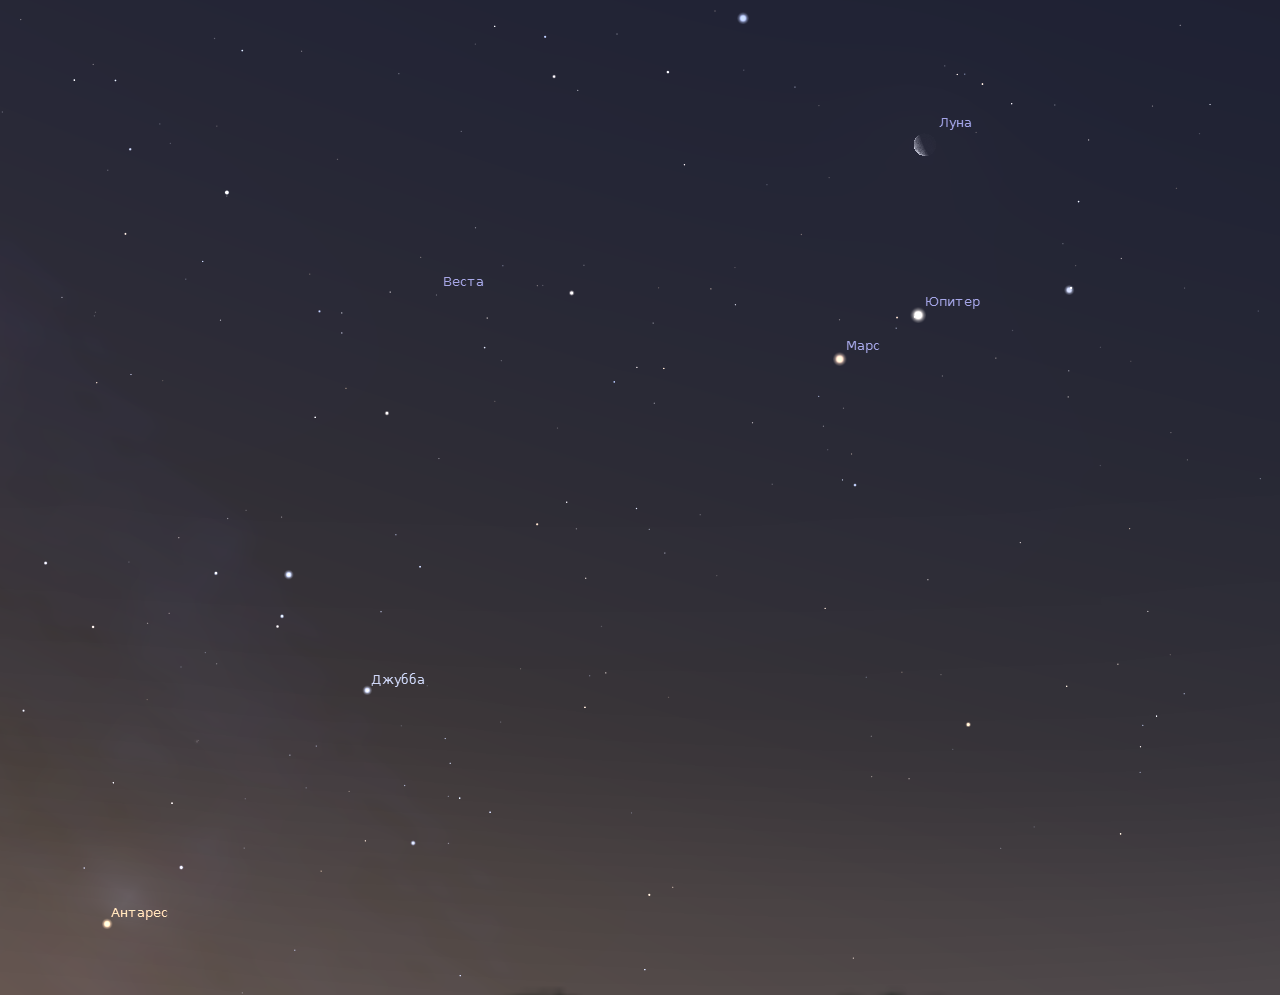 юпитер на небе фото